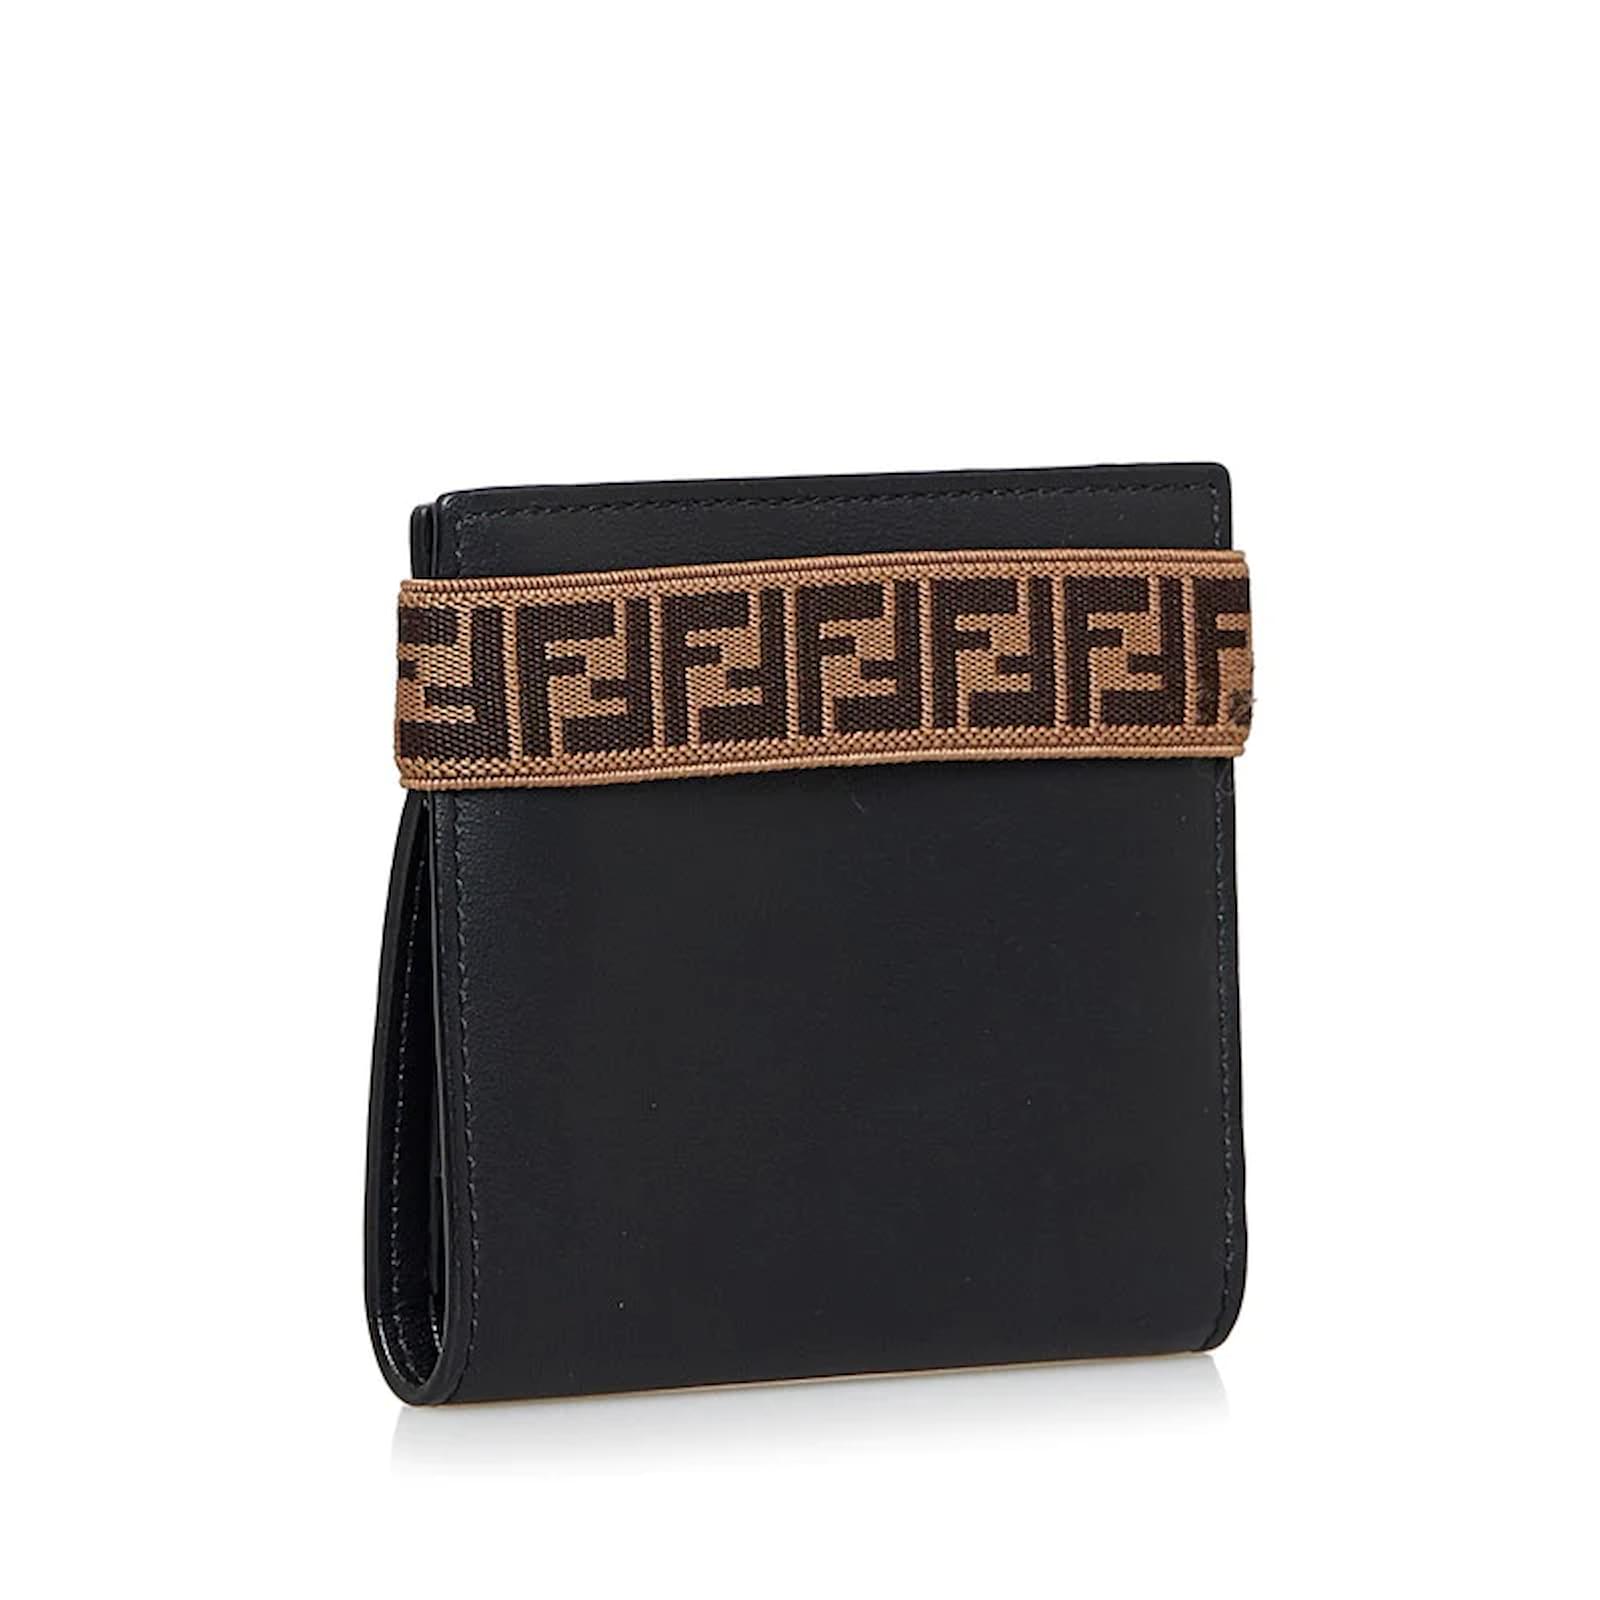 FENDI: wallet with FF logo - Black